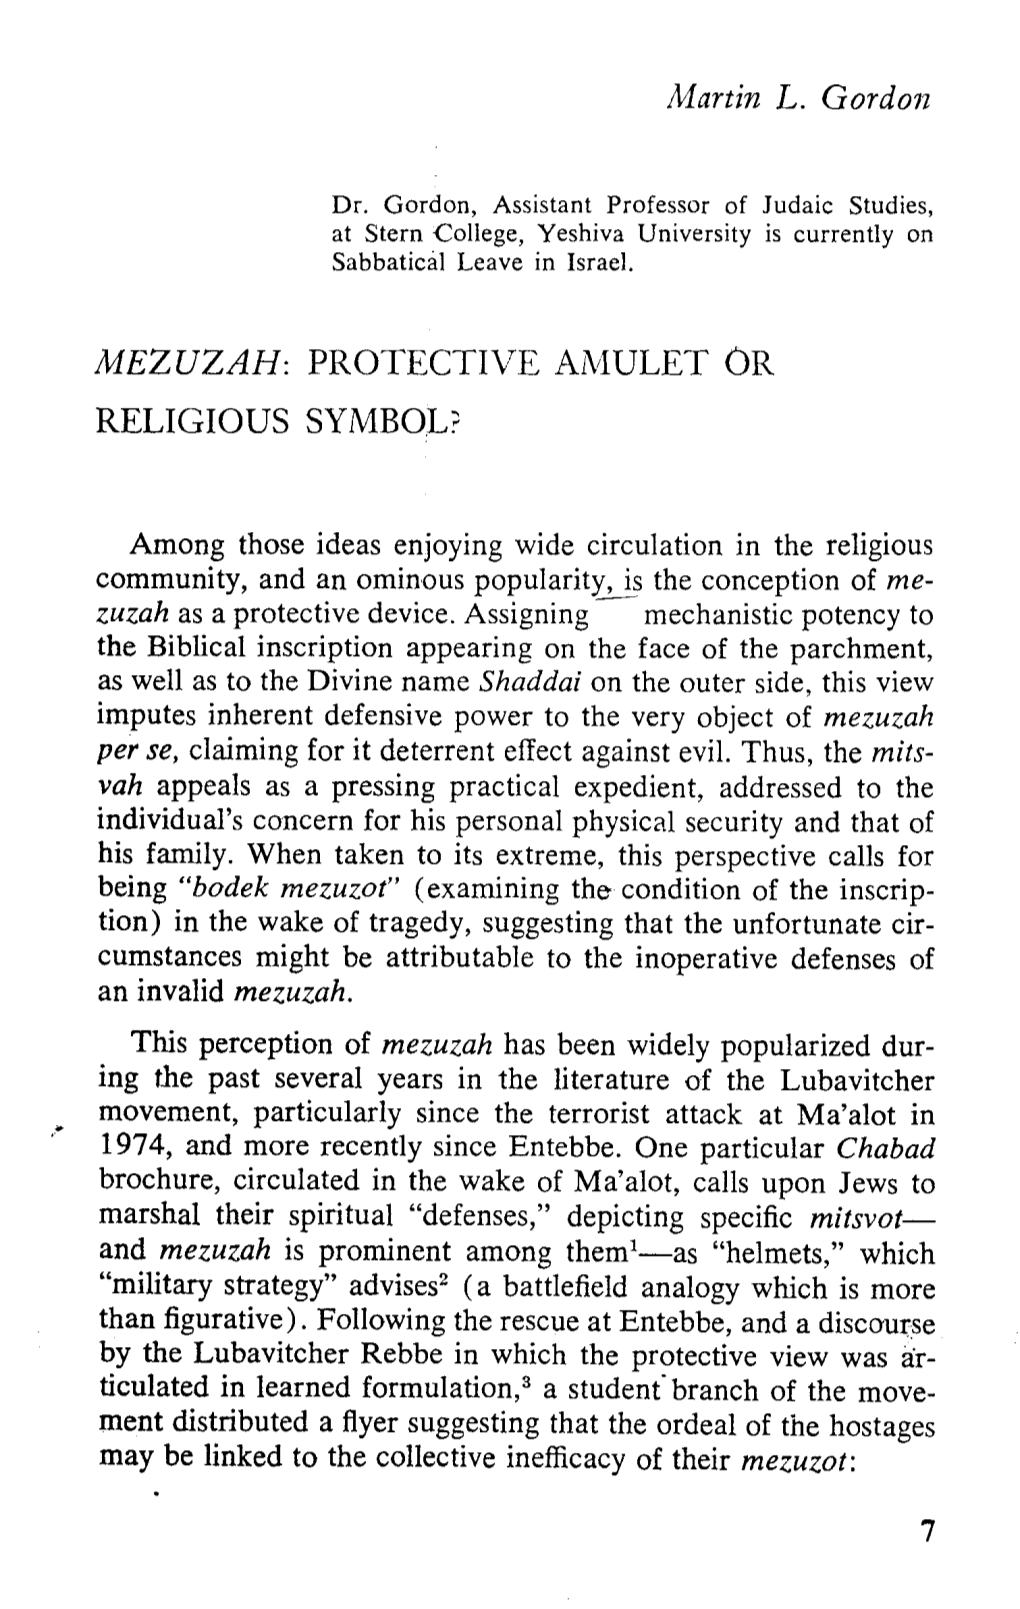 Mezuzah: Protective Amulet Or Religious Symbol?